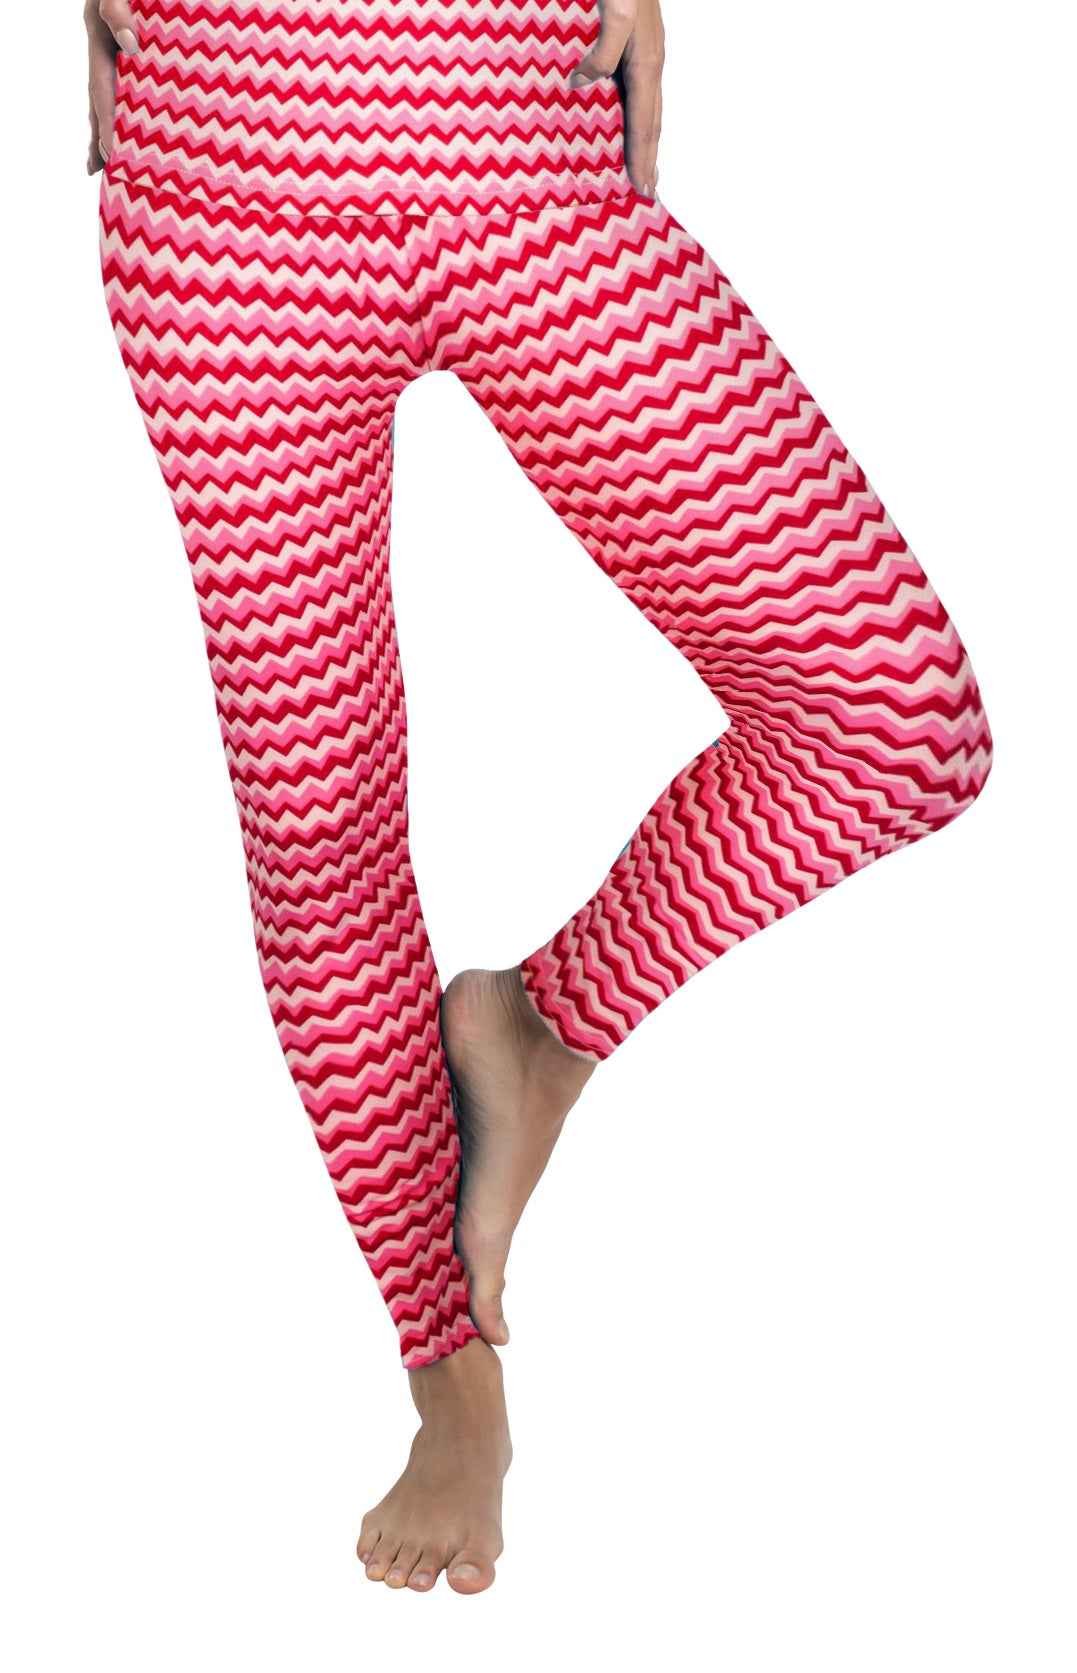 Rocky Women's Thermal Bottoms (Long John Base Layer Underwear Pants)  Insulated for Outdoor Ski Warmth/Extreme Cold Pajamas (Geometric -  X-Small), Geometric Design-standard, XS price in Saudi Arabia,   Saudi Arabia